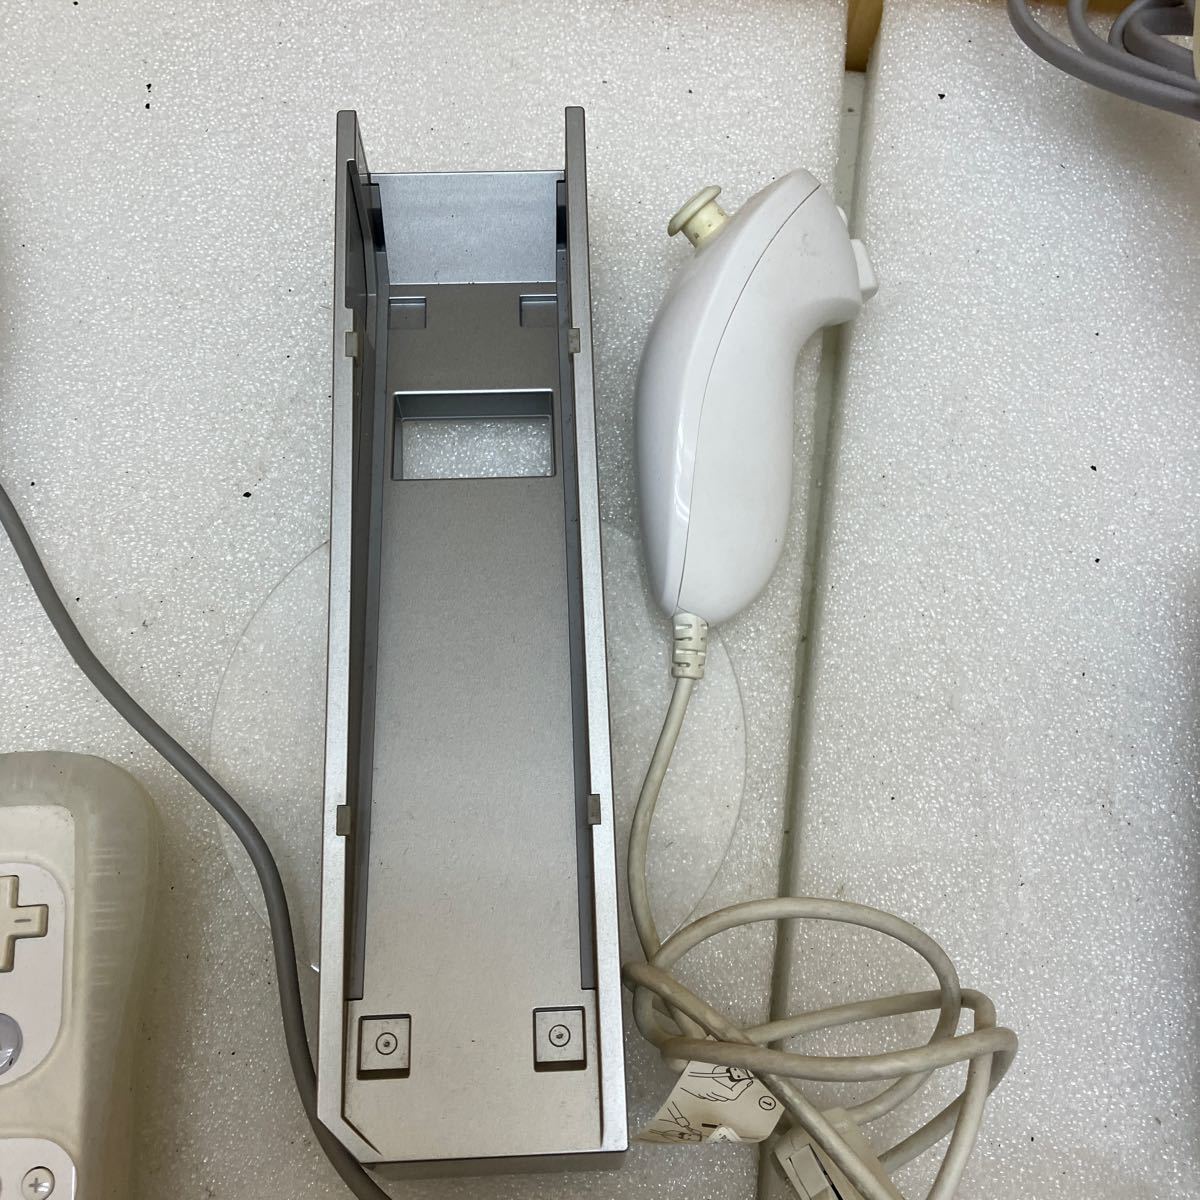 MK5256 Nintendo nintendo Nintendo Wii body only MODEL NO. RVL-001 (JPN) electrification has confirmed present condition goods 20231219